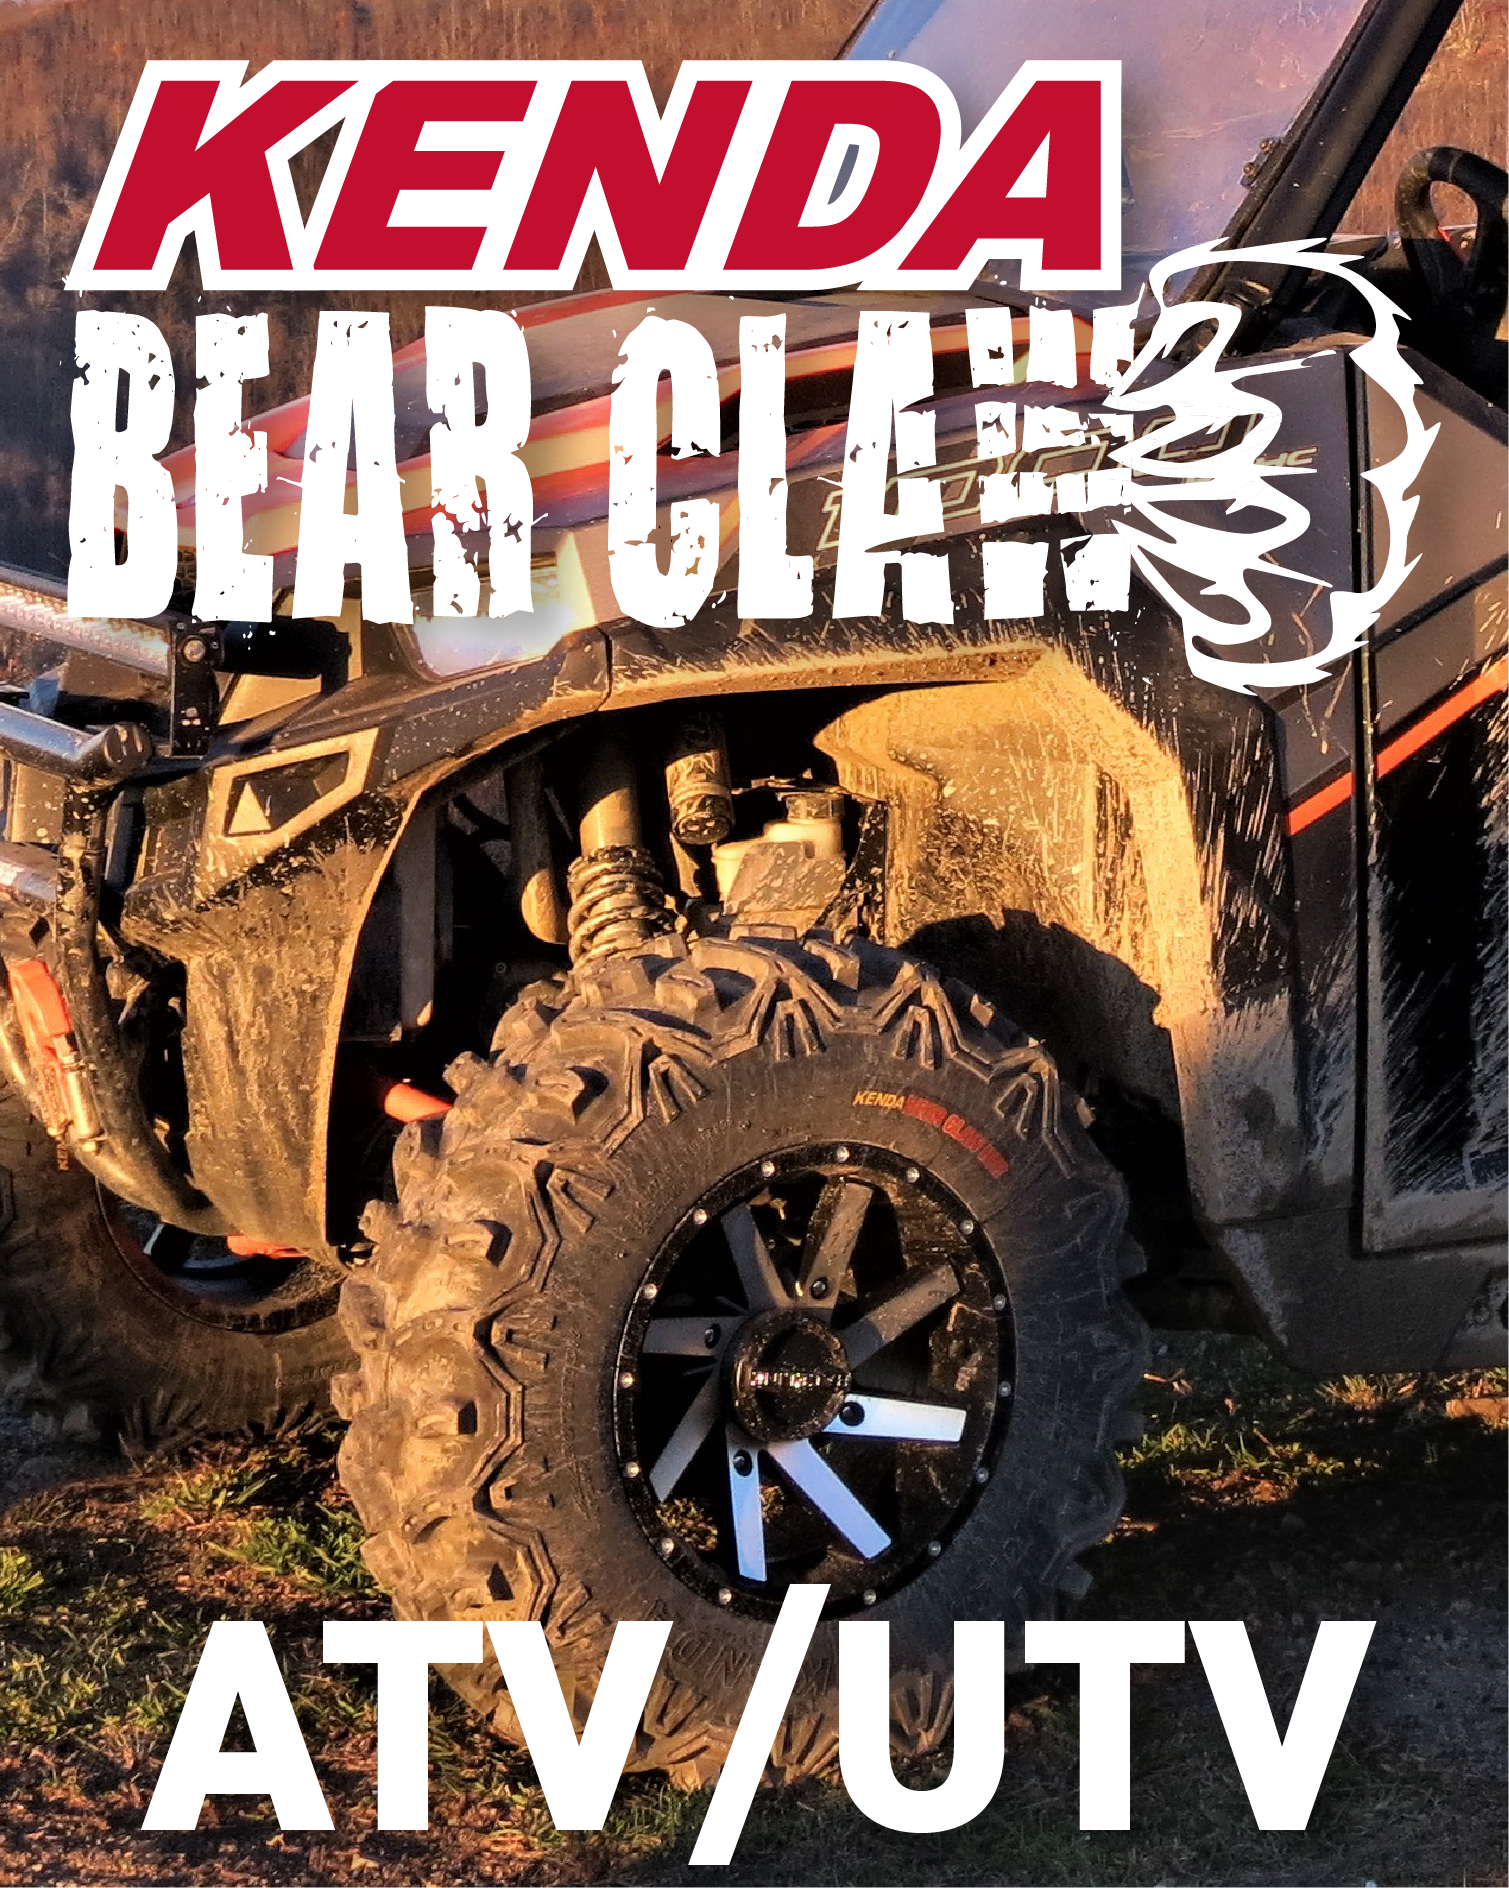 Kenda Bear Claw EX 23x8-10 F 23x10-10 R ATV Tires 6 PLY (4 Pack)